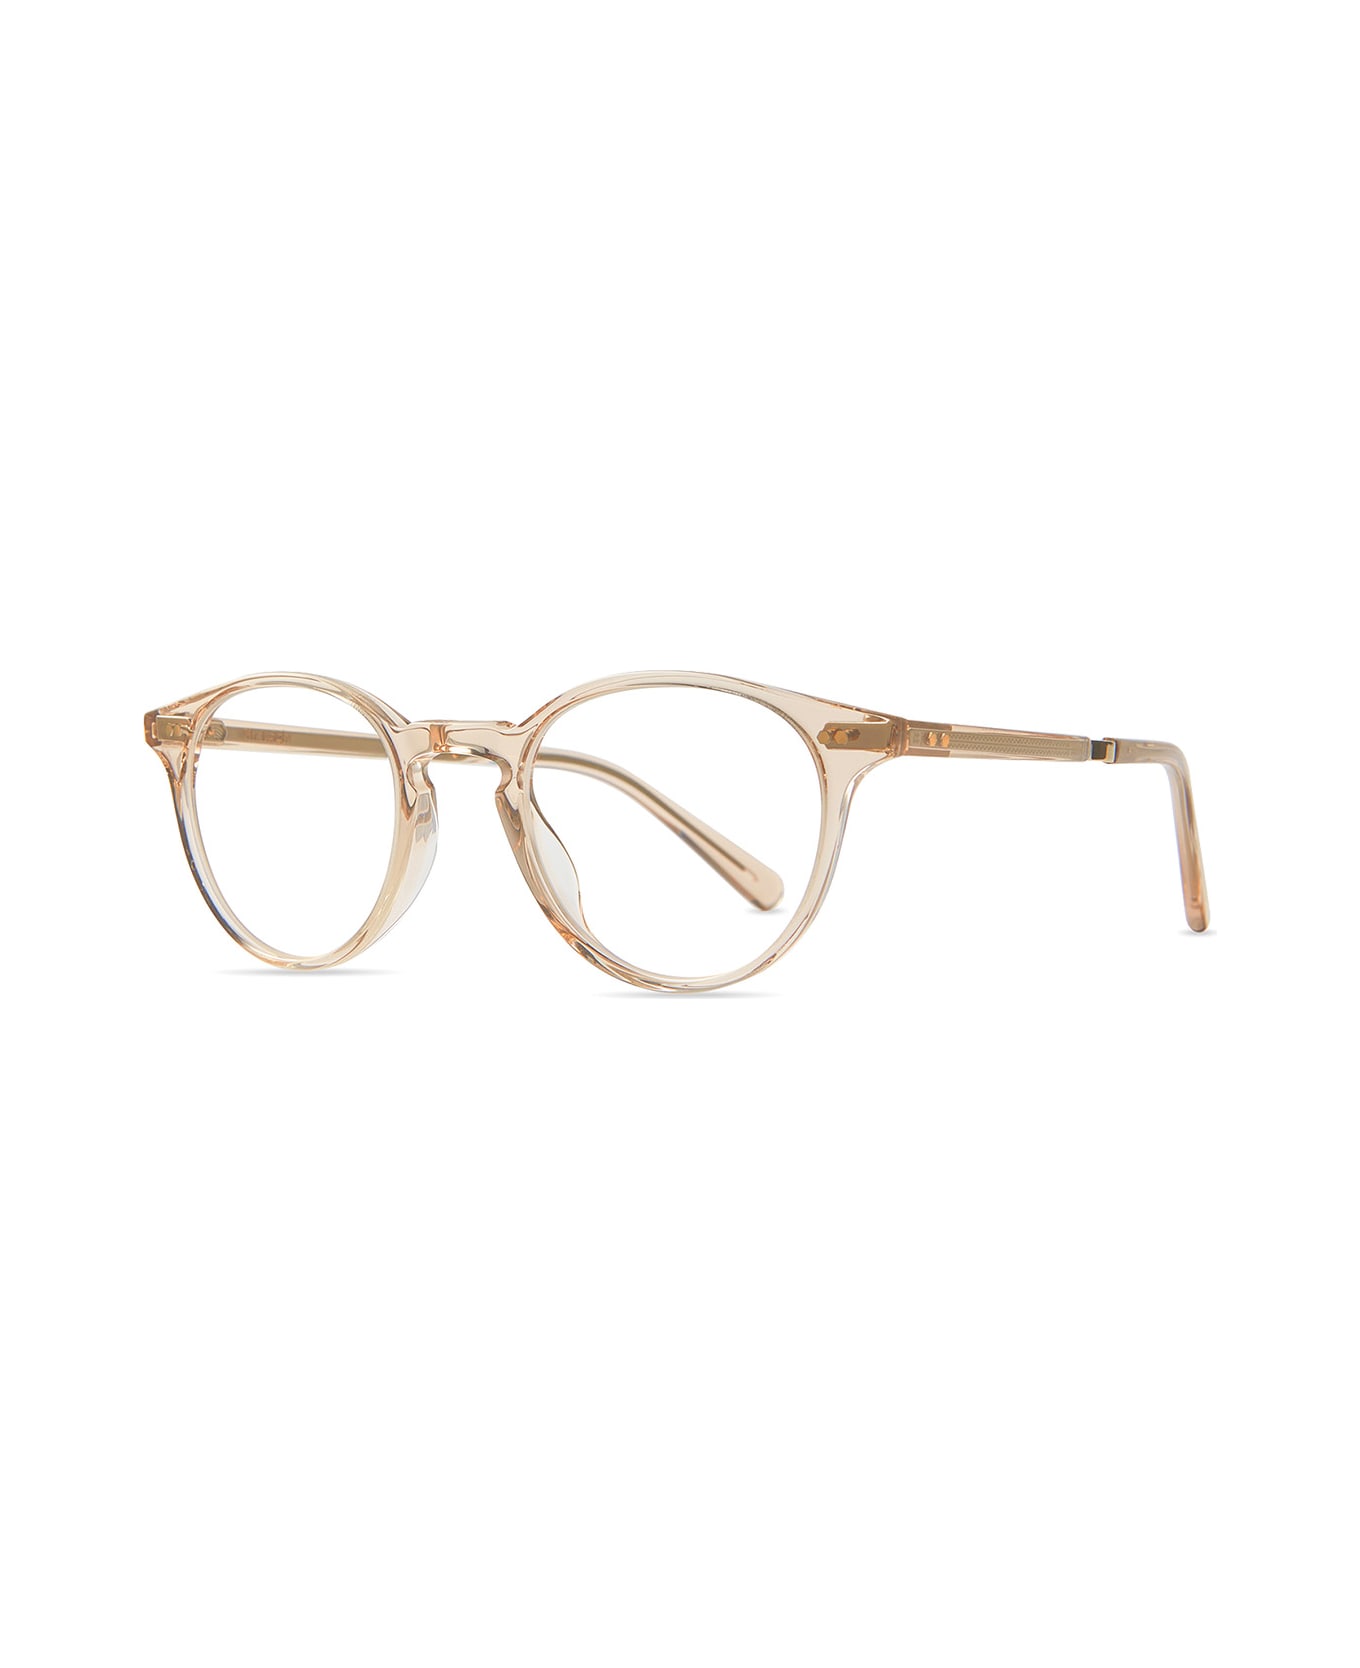 Mr. Leight Marmont C Dune-white Gold Glasses - Dune-White Gold アイウェア